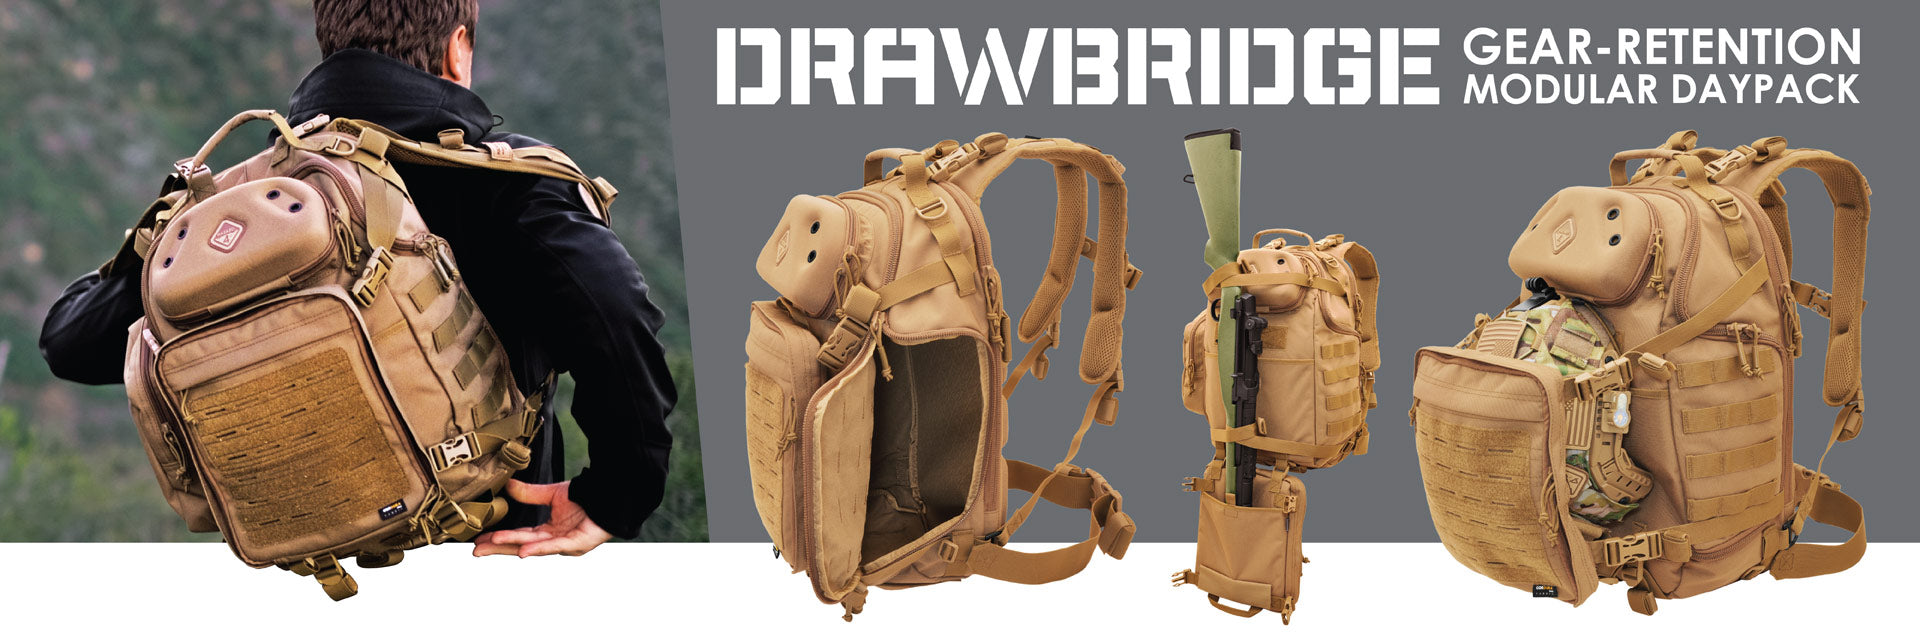 Drawbridge daypack by Hazard 4® - Outdoor, Military, and Pro Gear